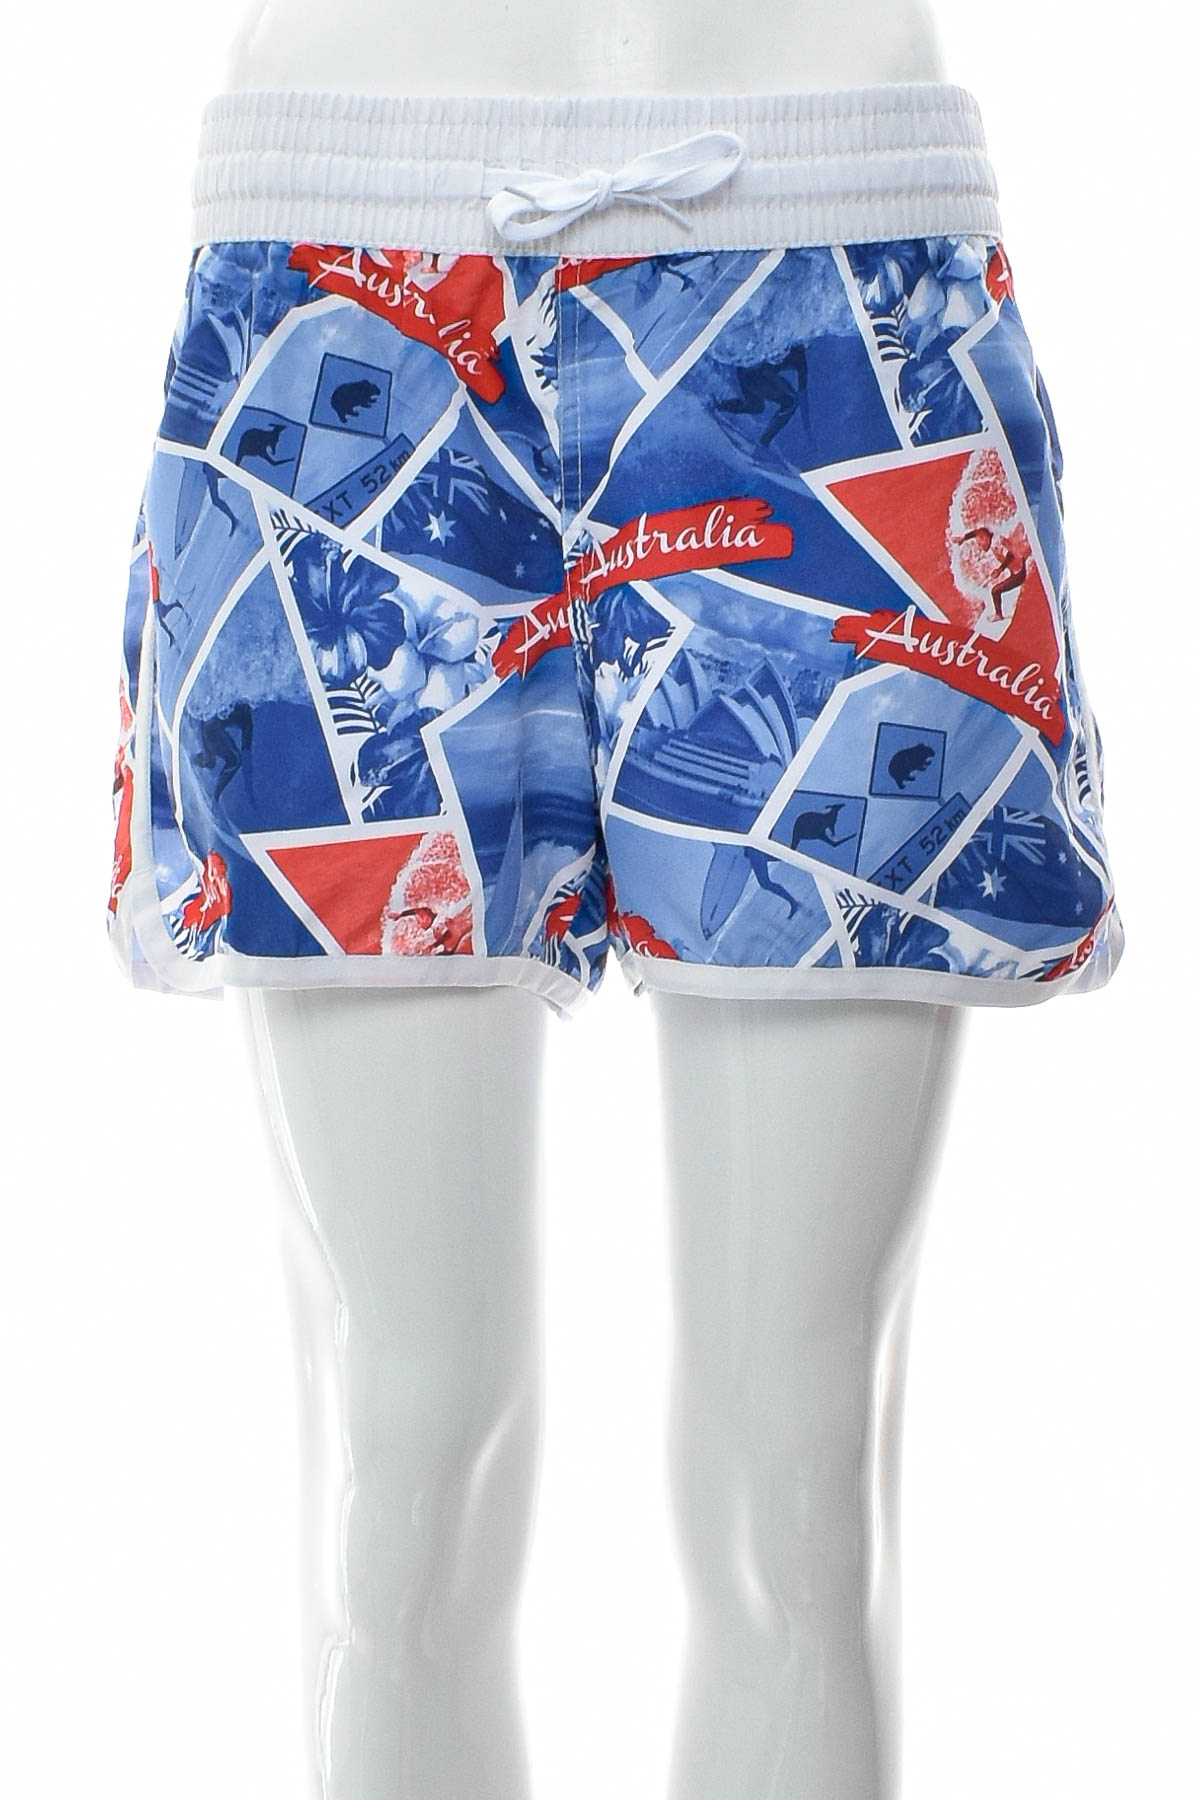 Women's shorts - Crane - 0